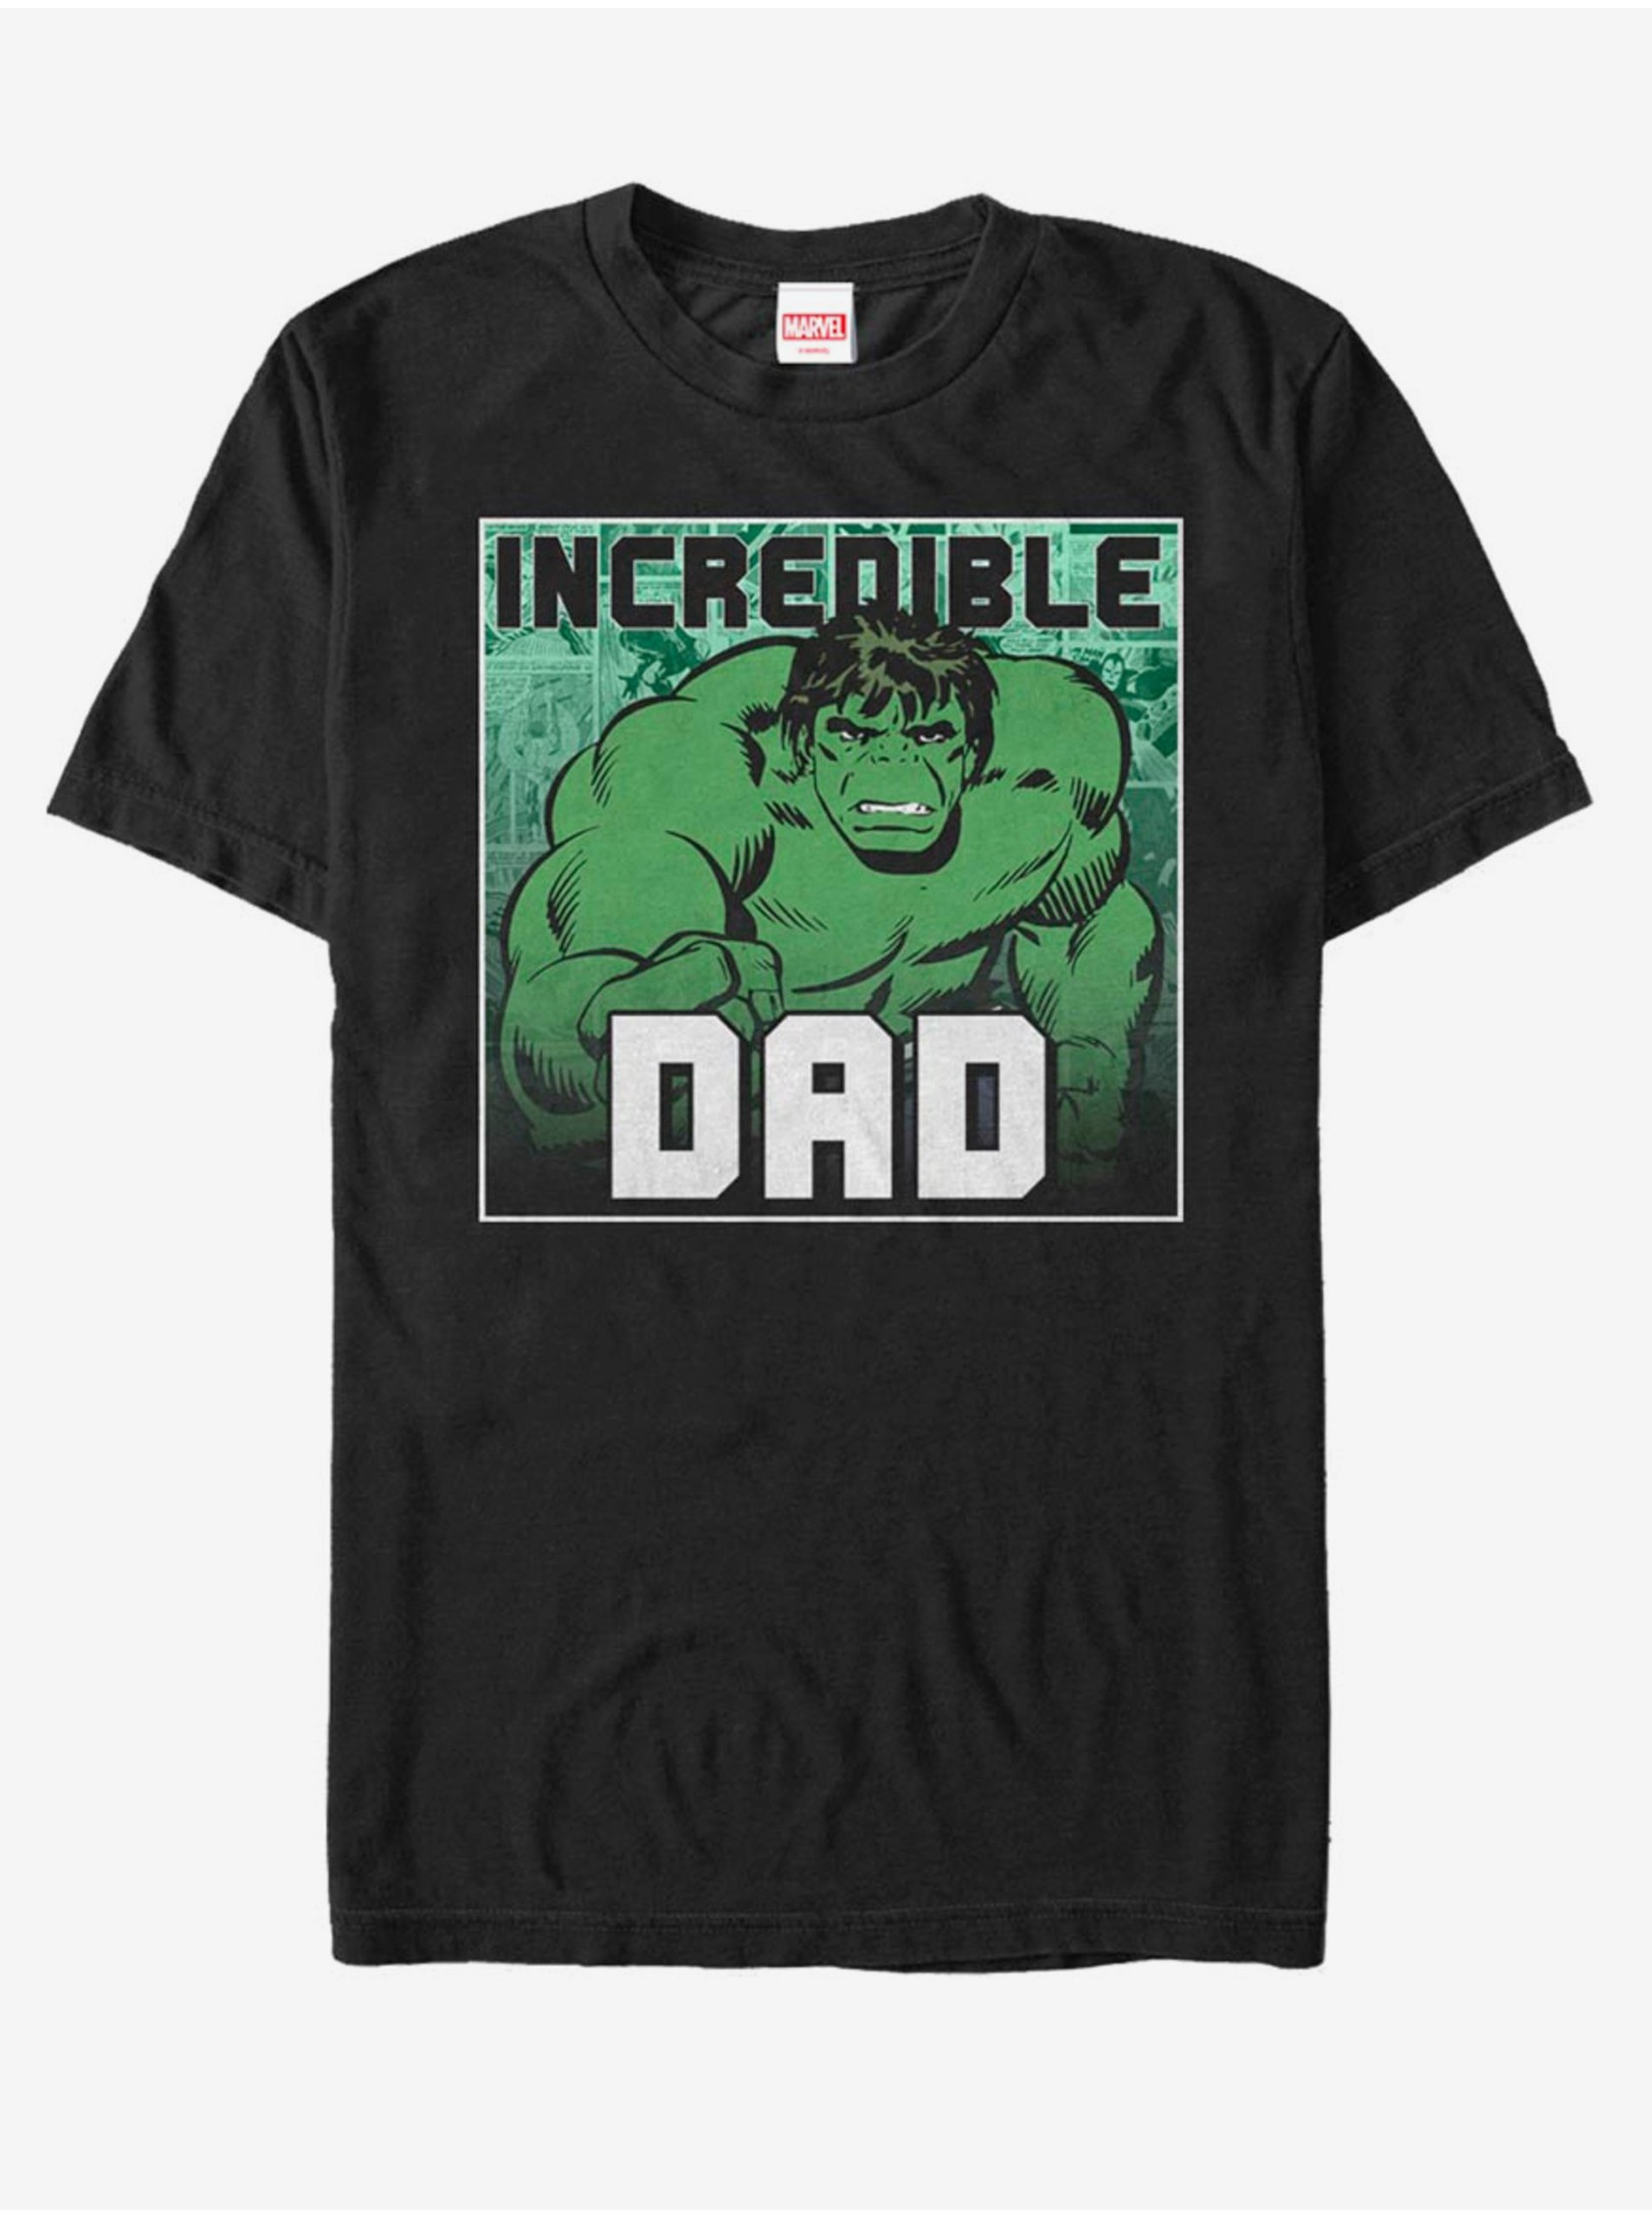 Lacno Černé unisex tričko ZOOT.Fan Marvel Incredible Dad